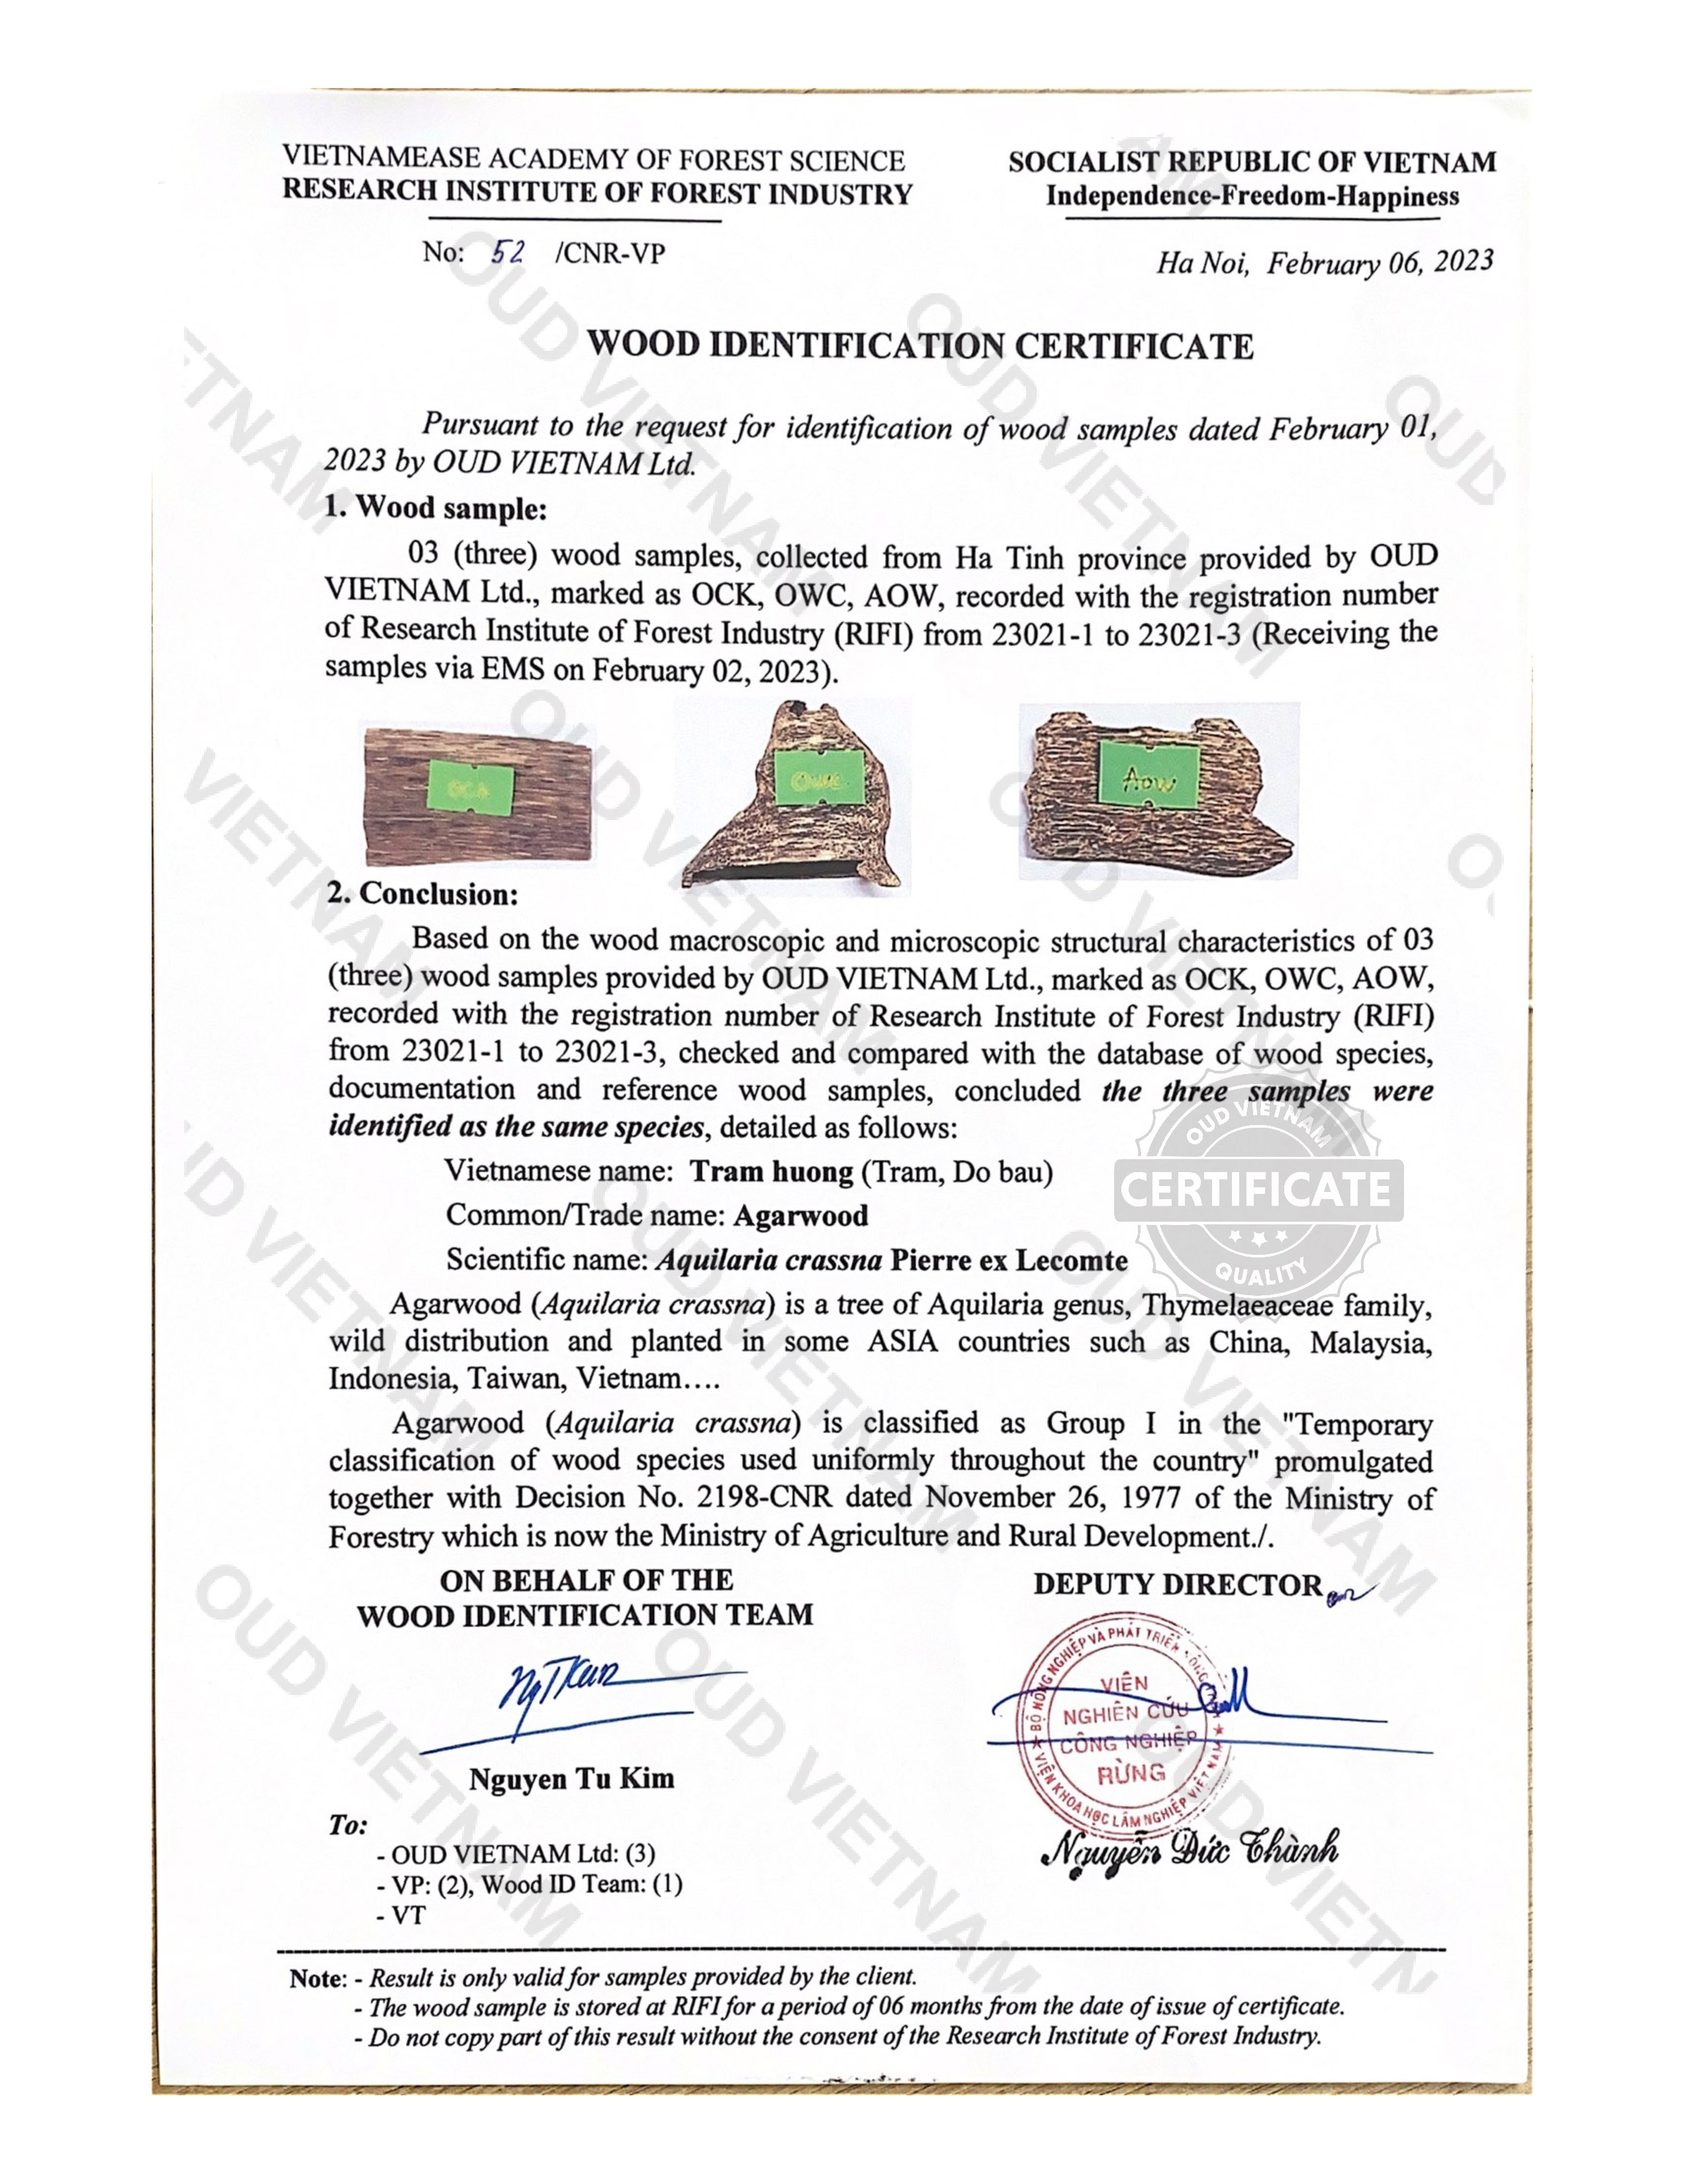 Oud Vietnam Wood Identification Certificate awarded by VAFS.